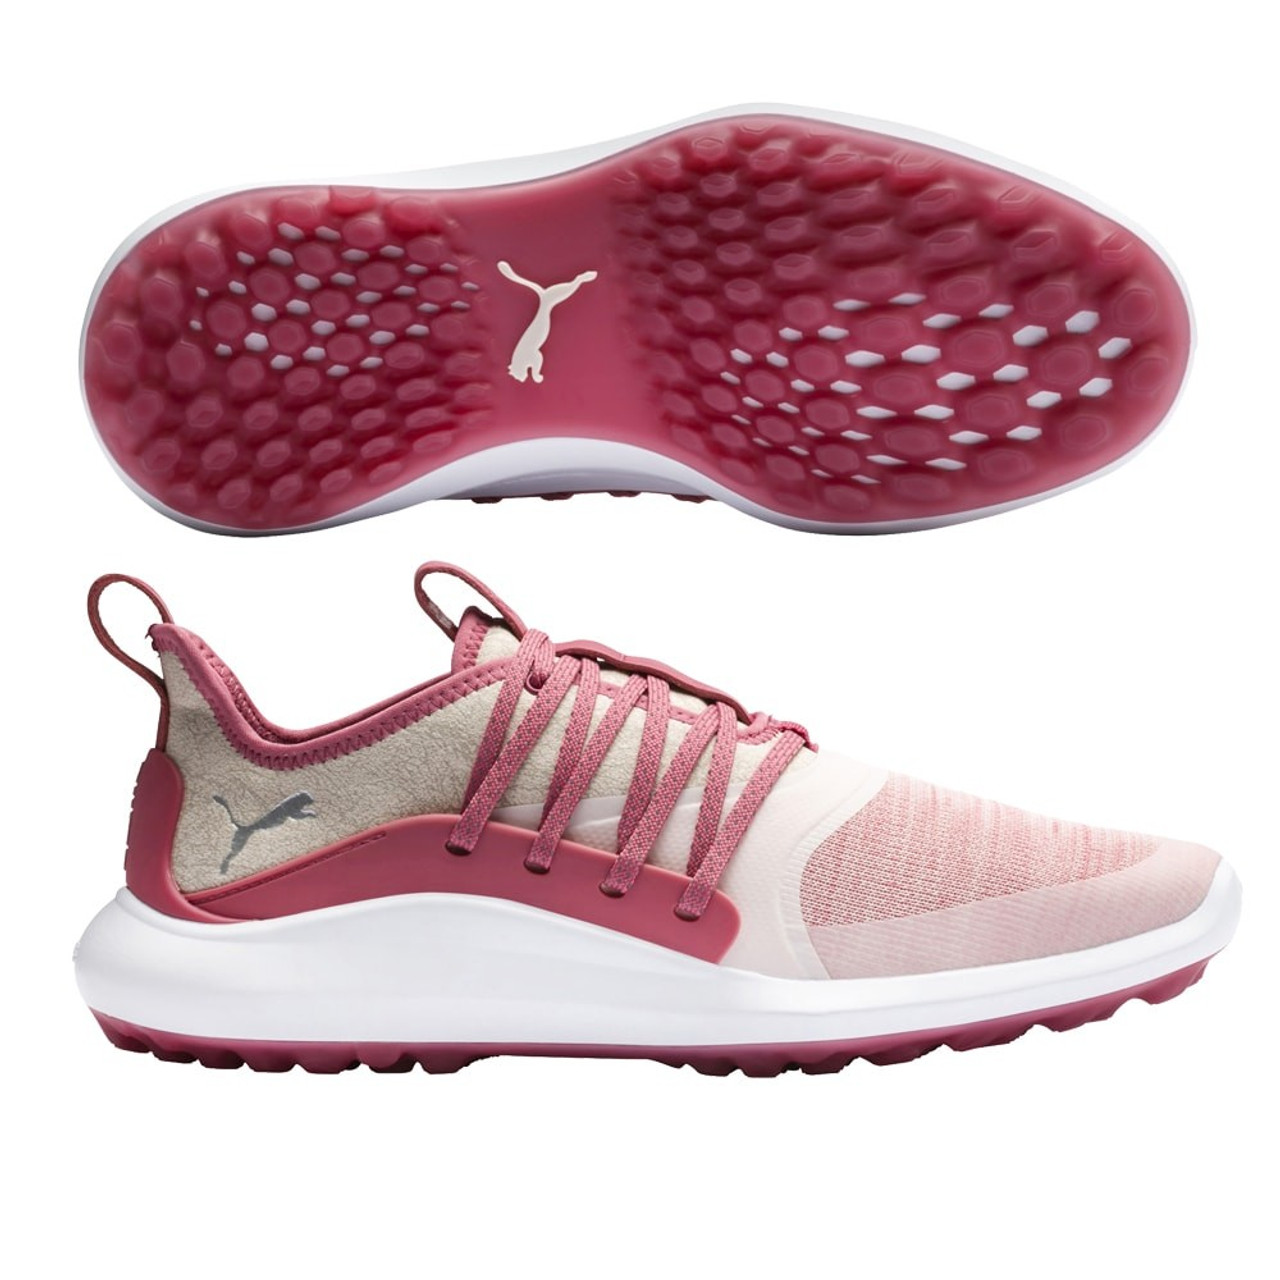 puma womens golf shoes pink